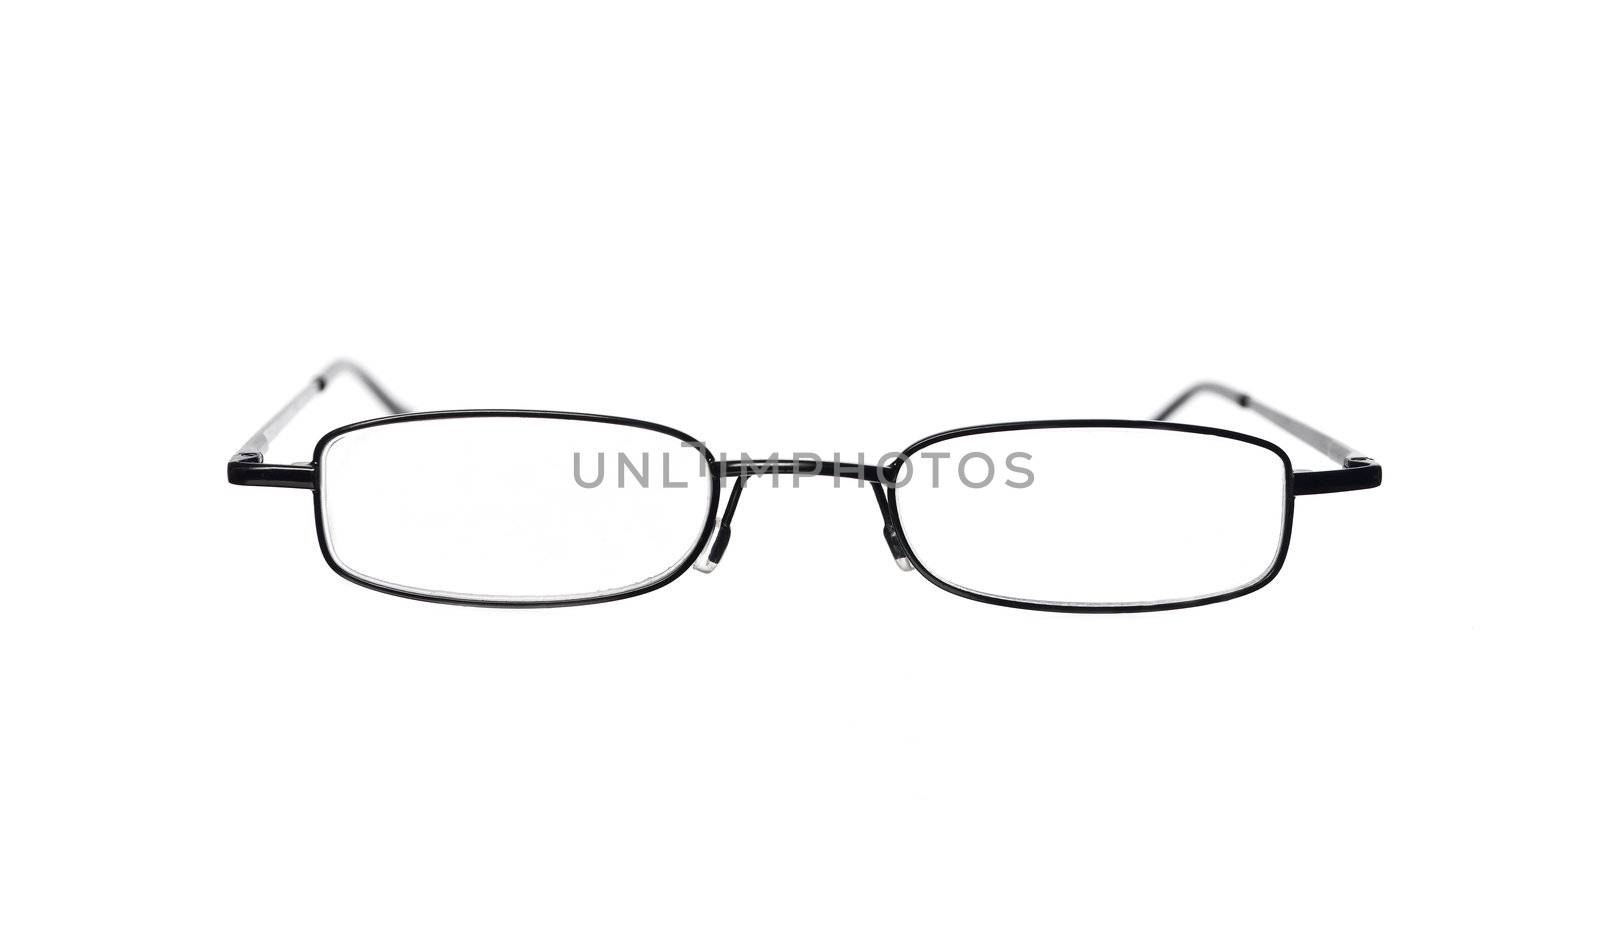 Glasses by gemenacom